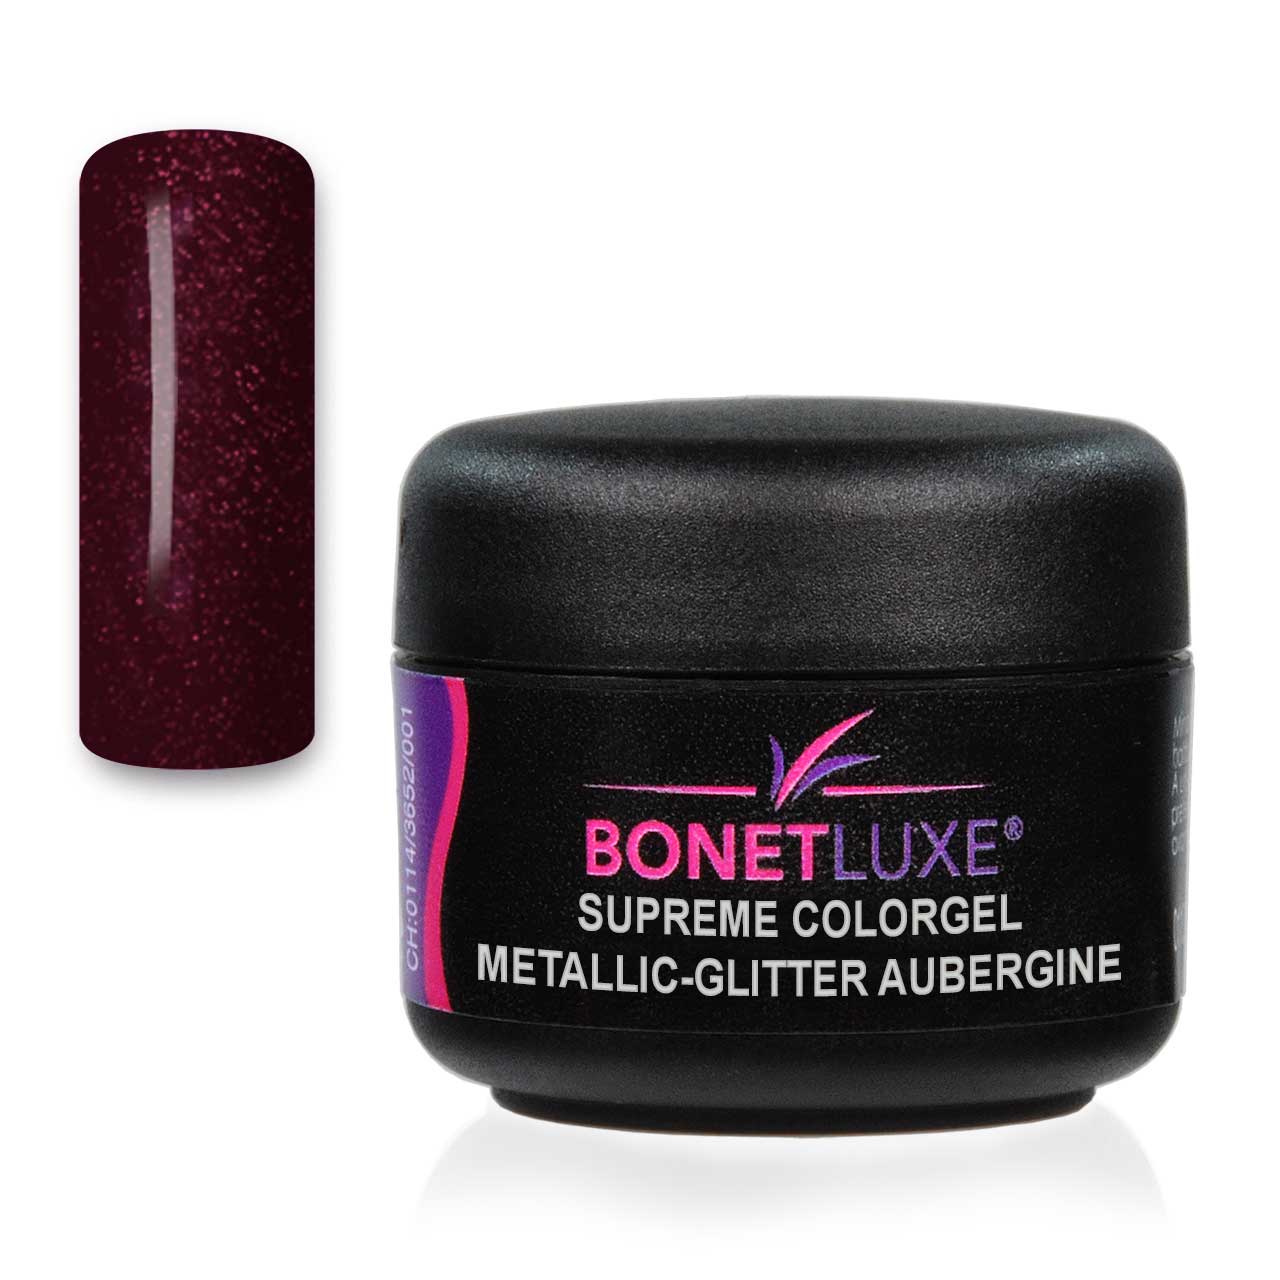 Bonetluxe Supreme Colorgel Metallic-Glitter Aubergine